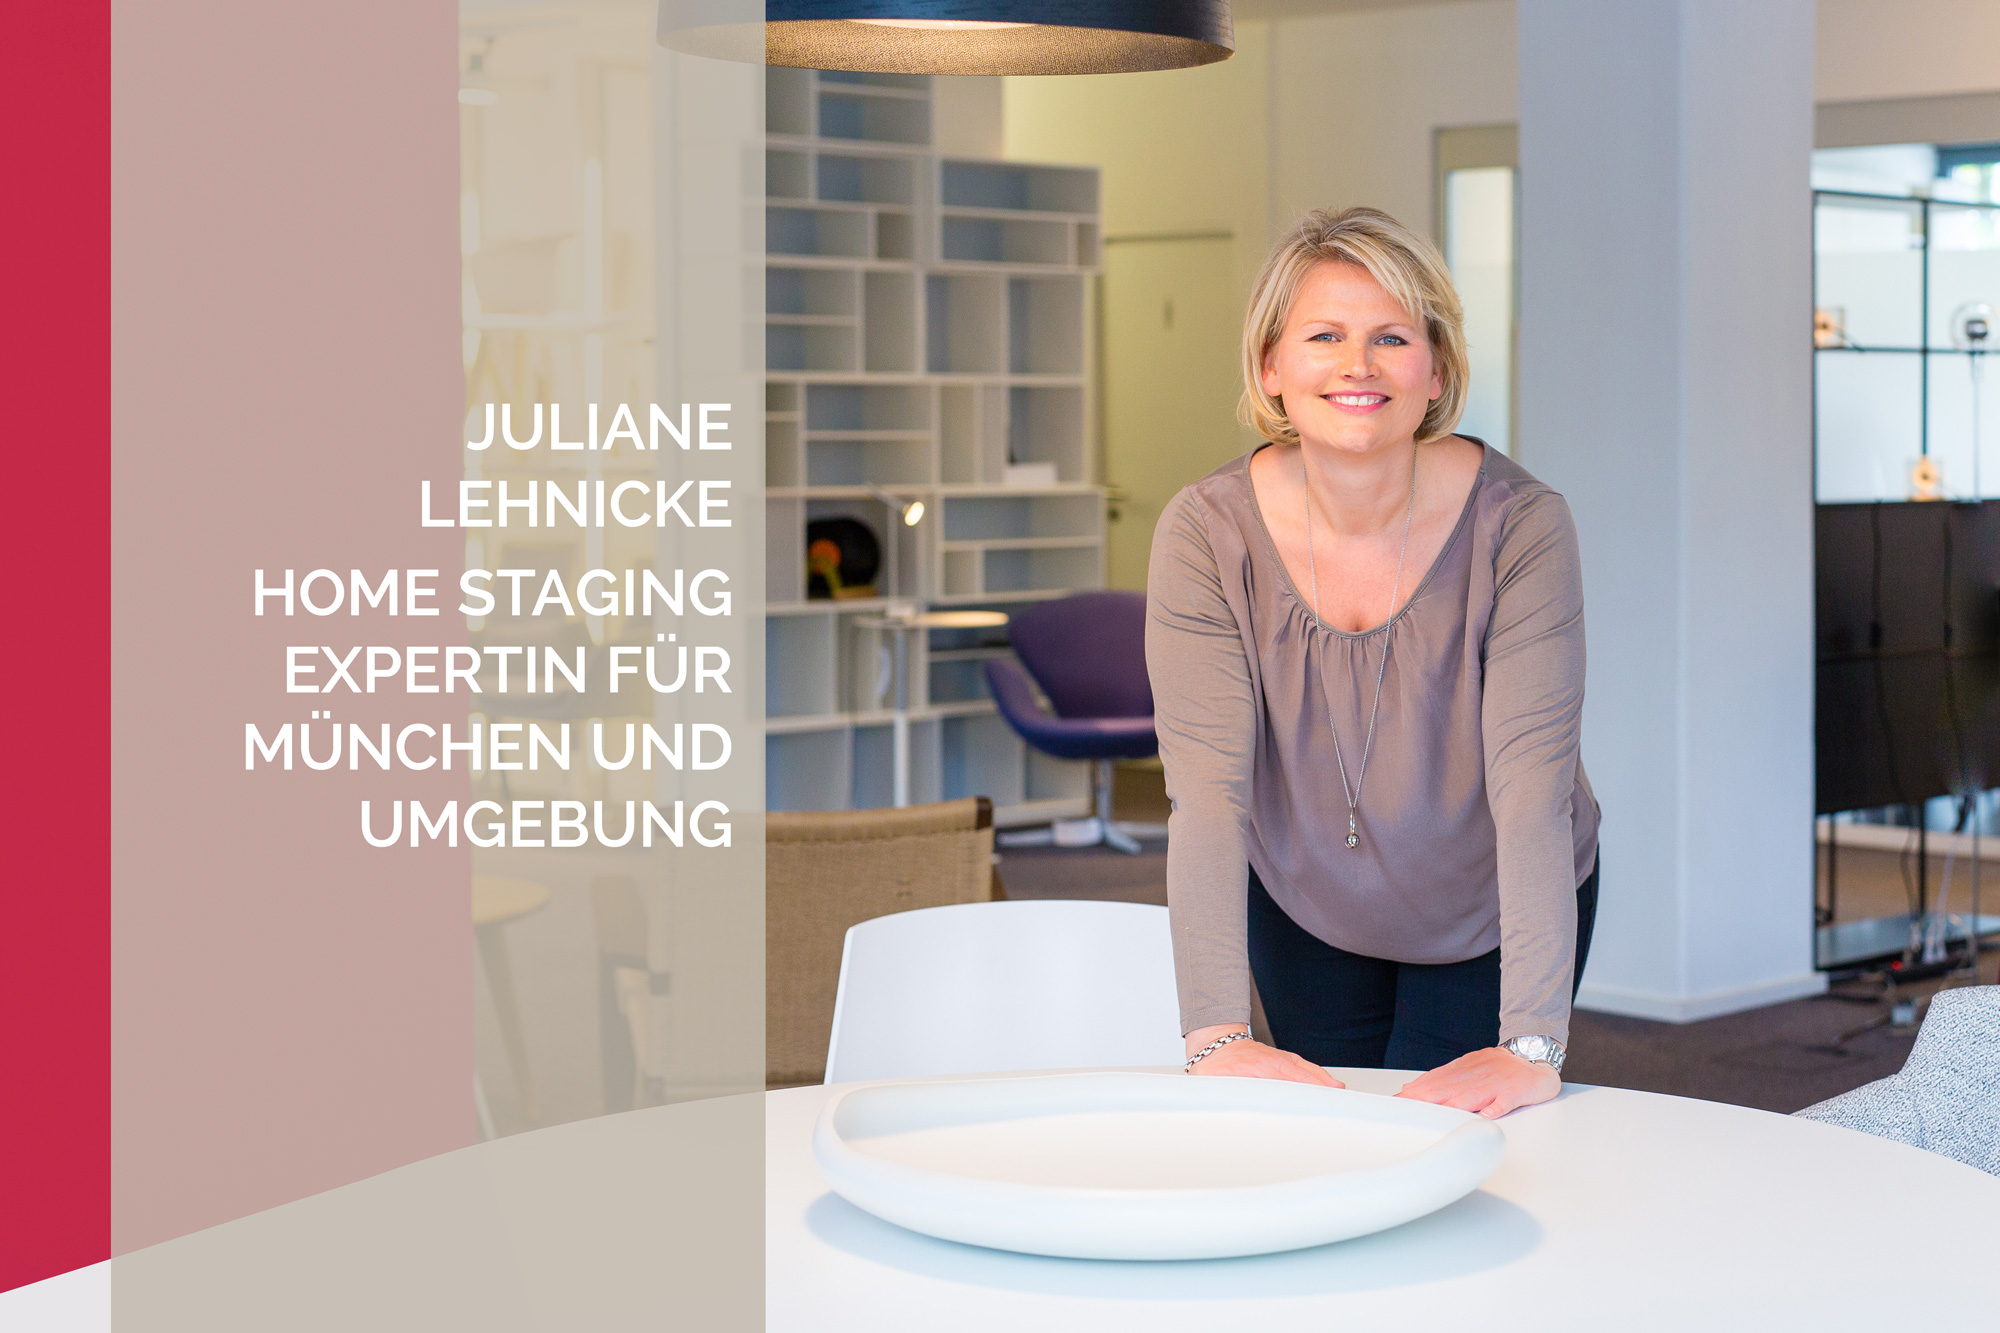 Muenchner Home Staging Agentur – Juliane Lehnicke